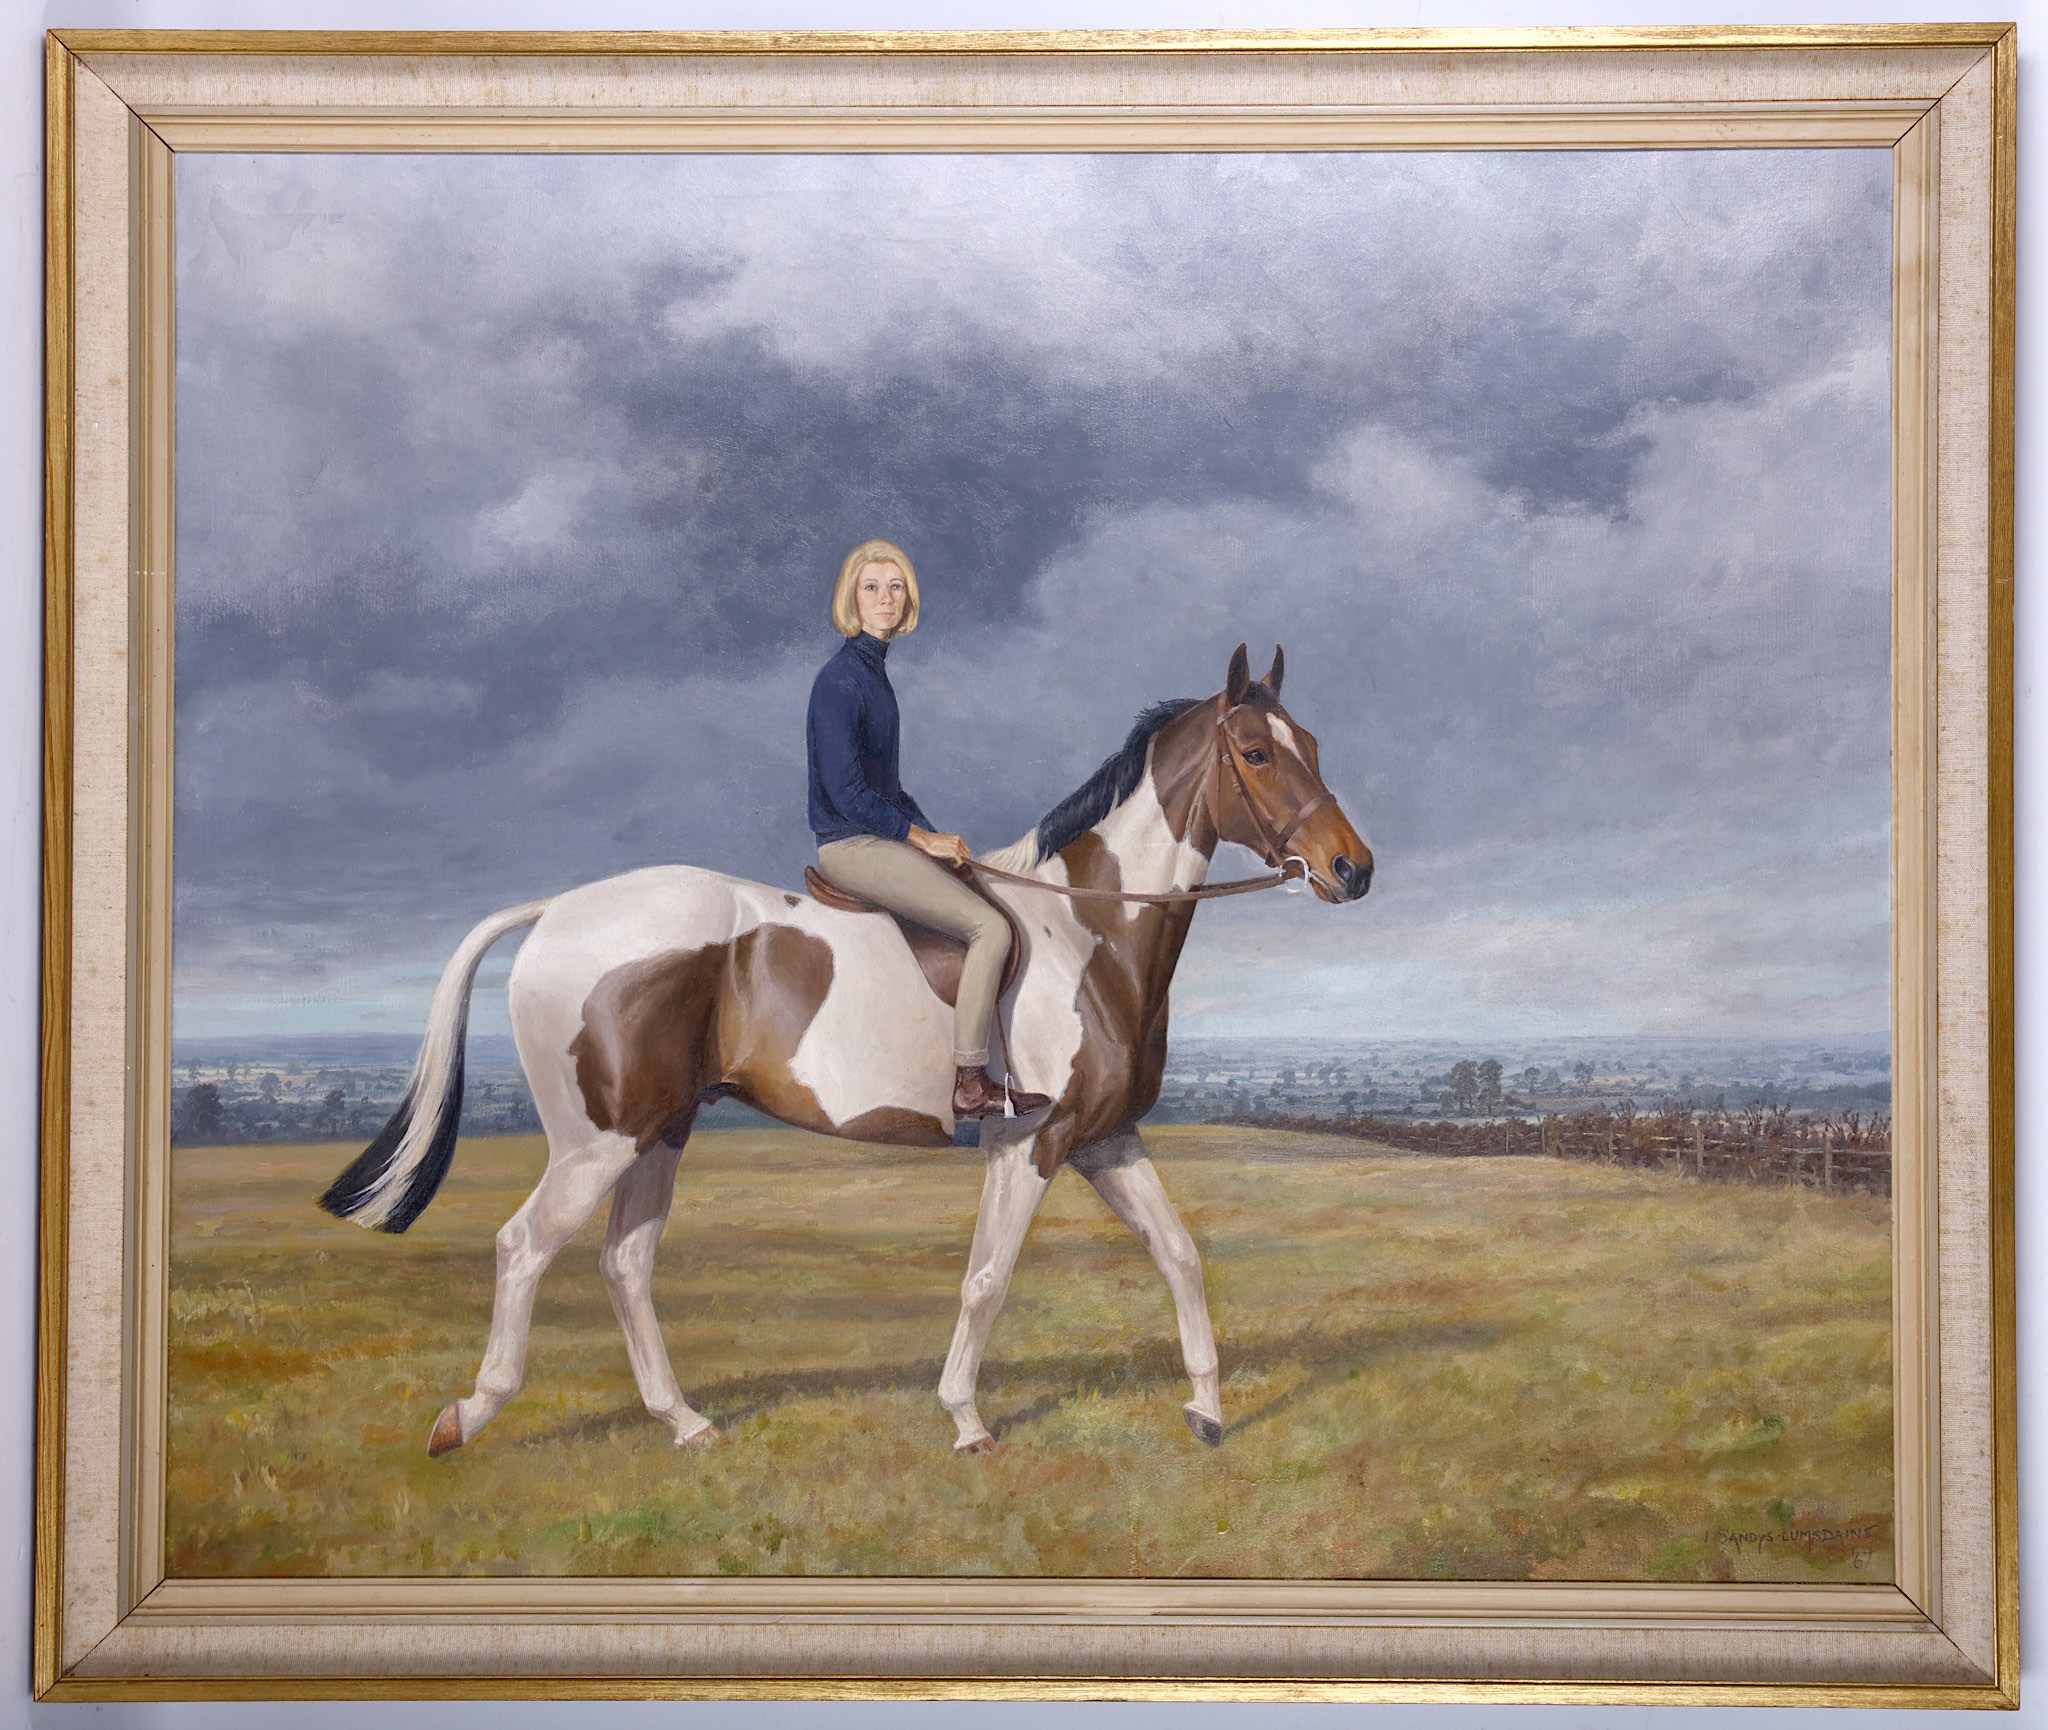 Leesa Sandys Lumsdaine 1936-1980's, 'Cordyn Pumfrey & Peanuts' 1967, portrait of horse and sitter in